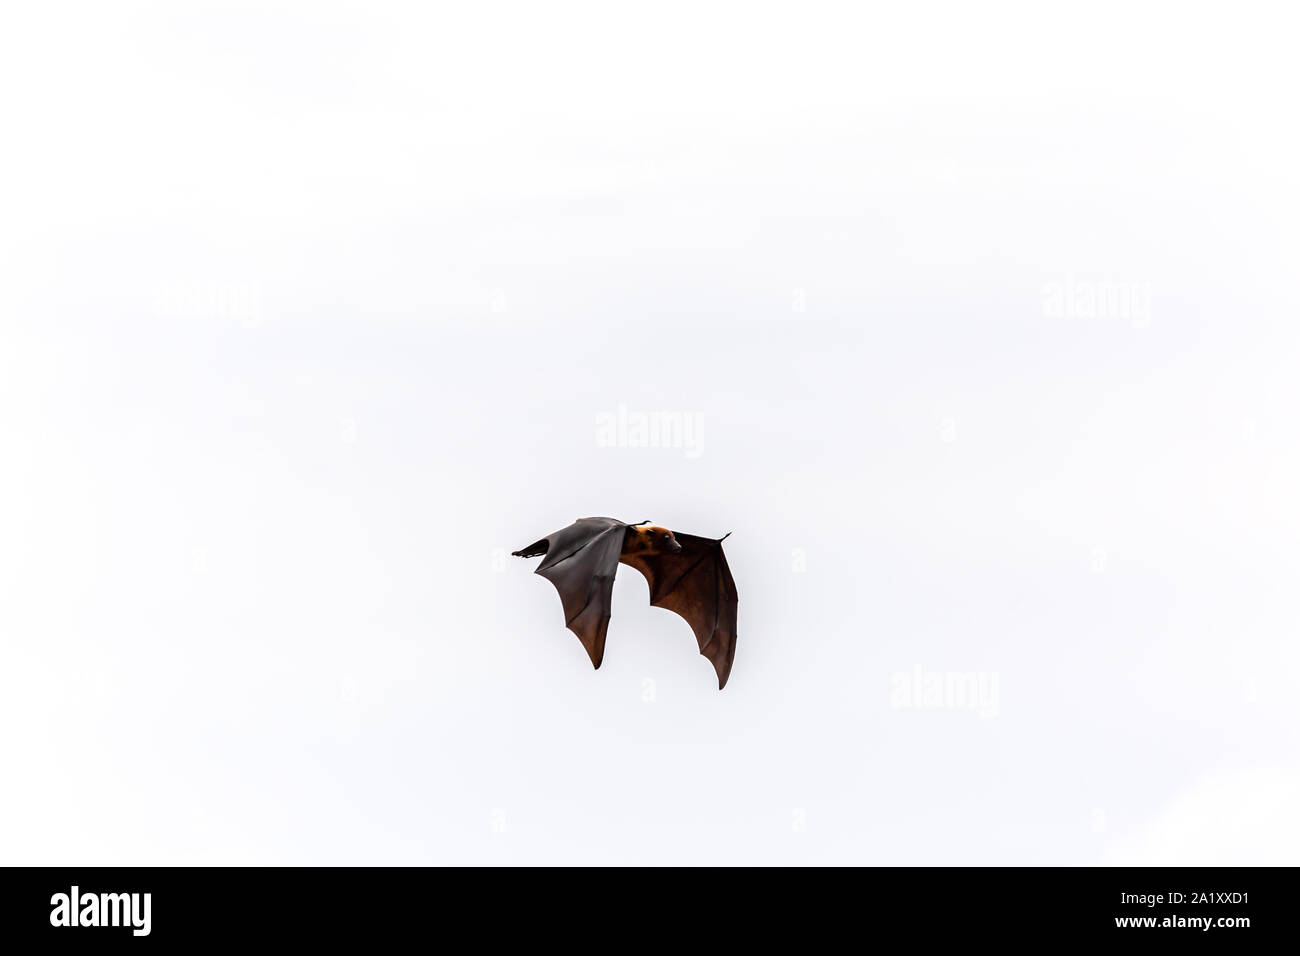 flying fox in flight over the Bentota River Sri Lanka Stock Photo